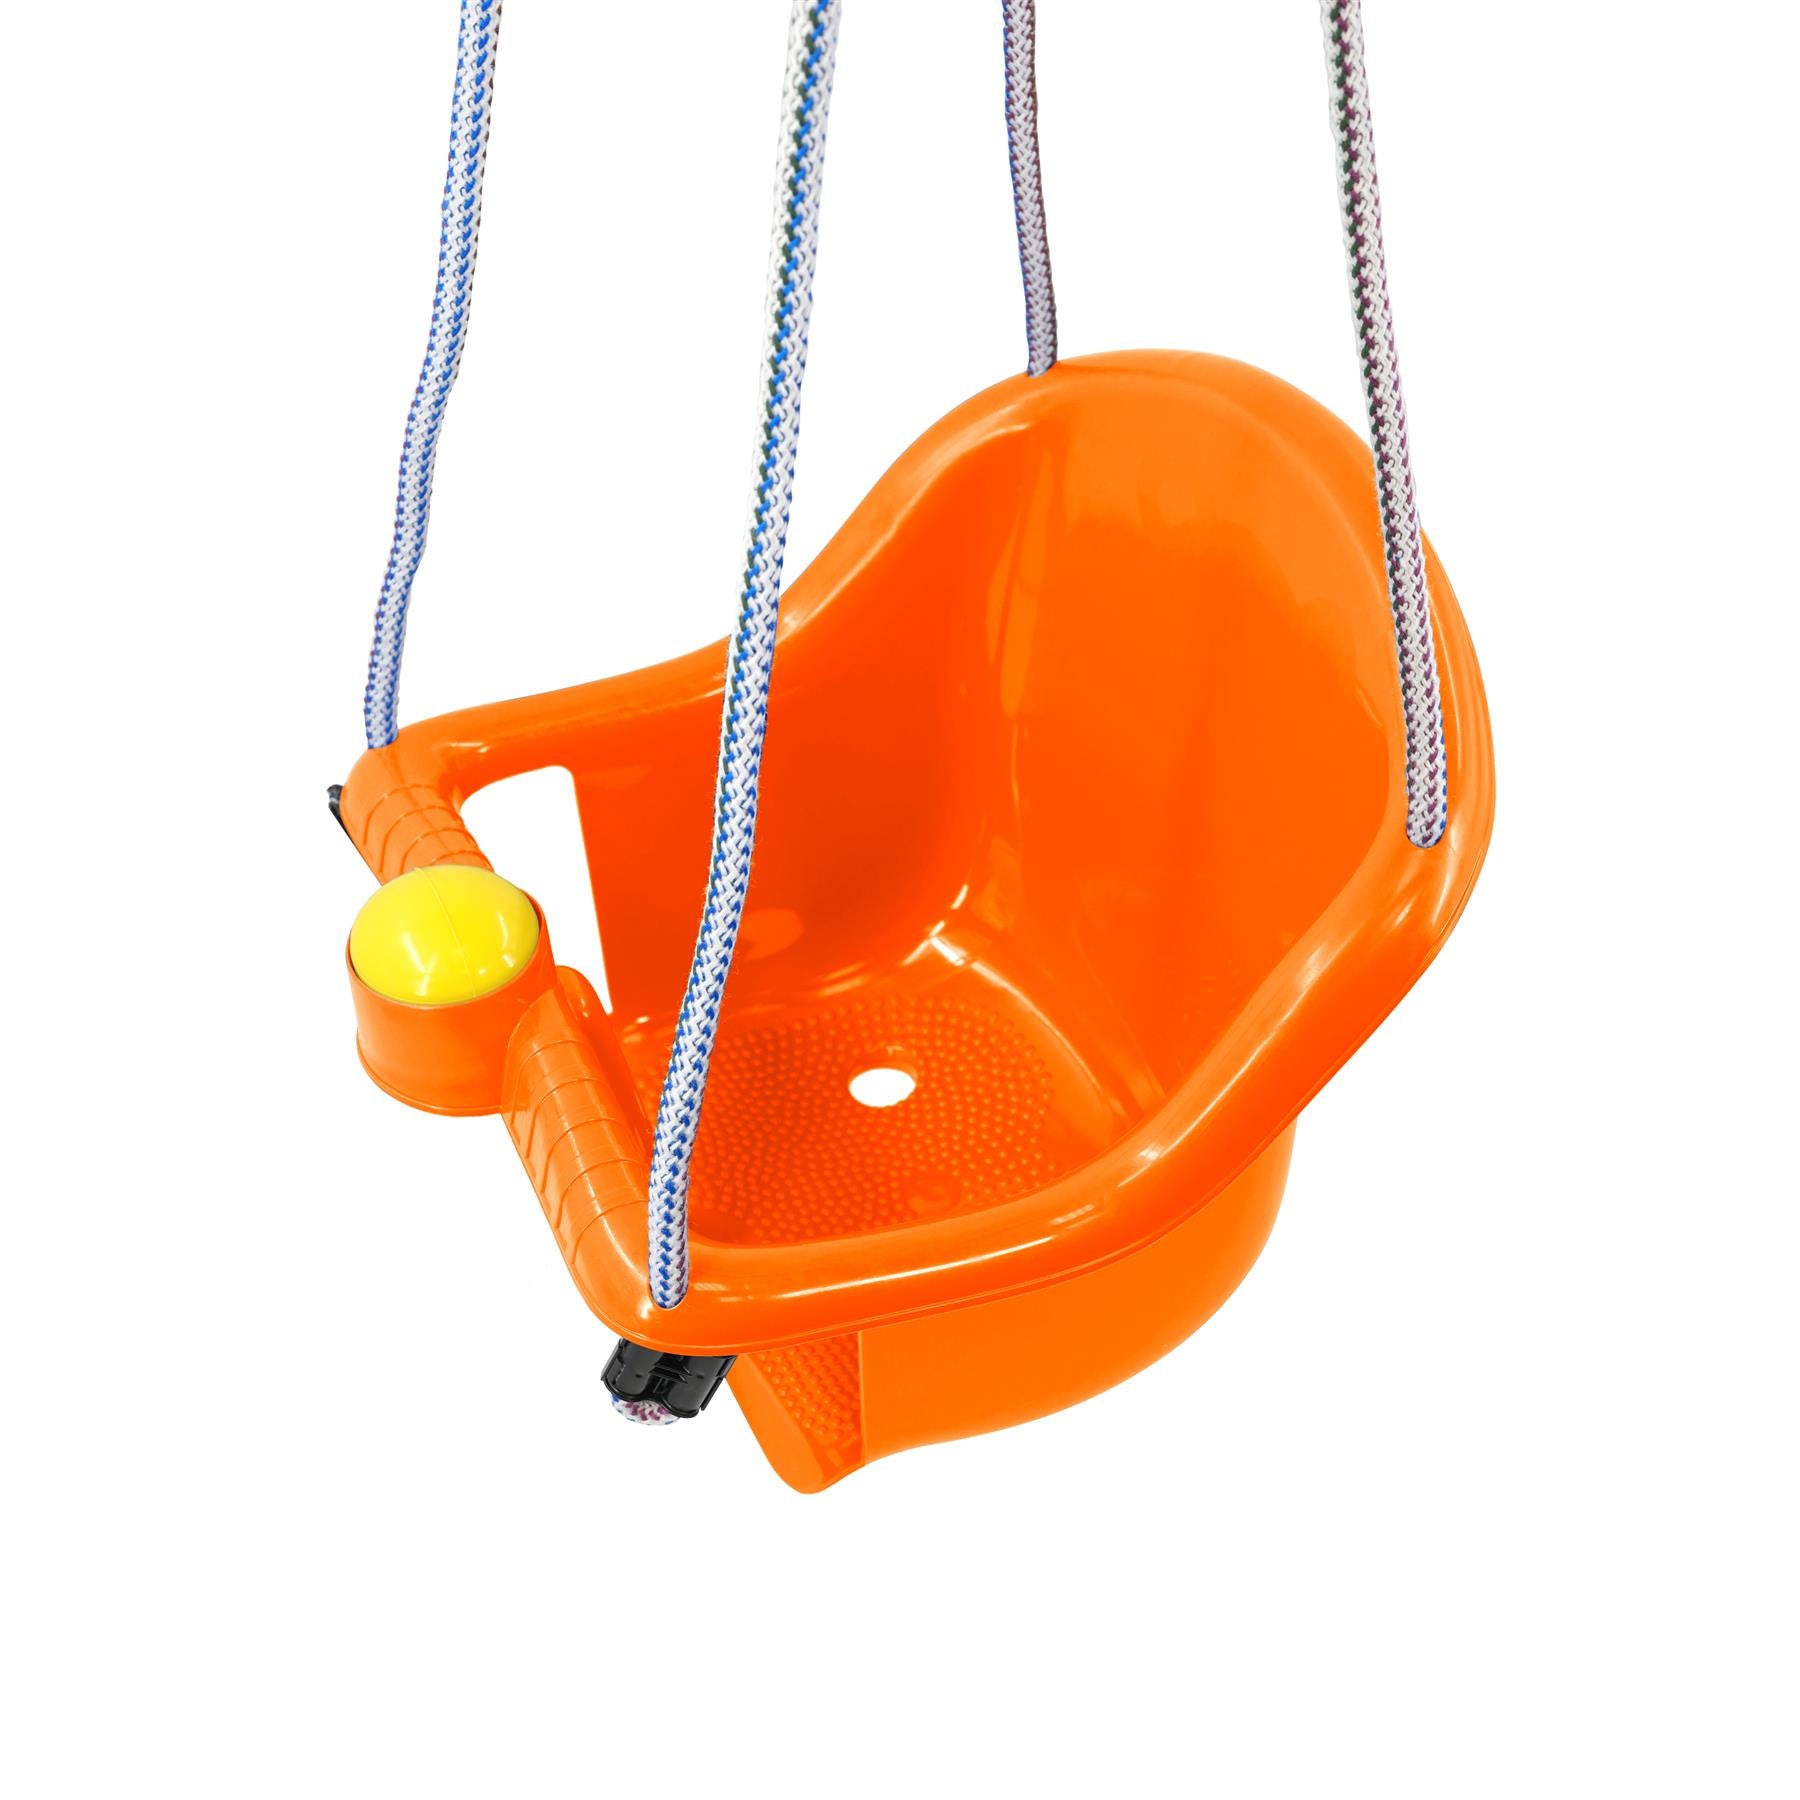 Orange Children's Safety Swing Seat by MTS - UKBuyZone